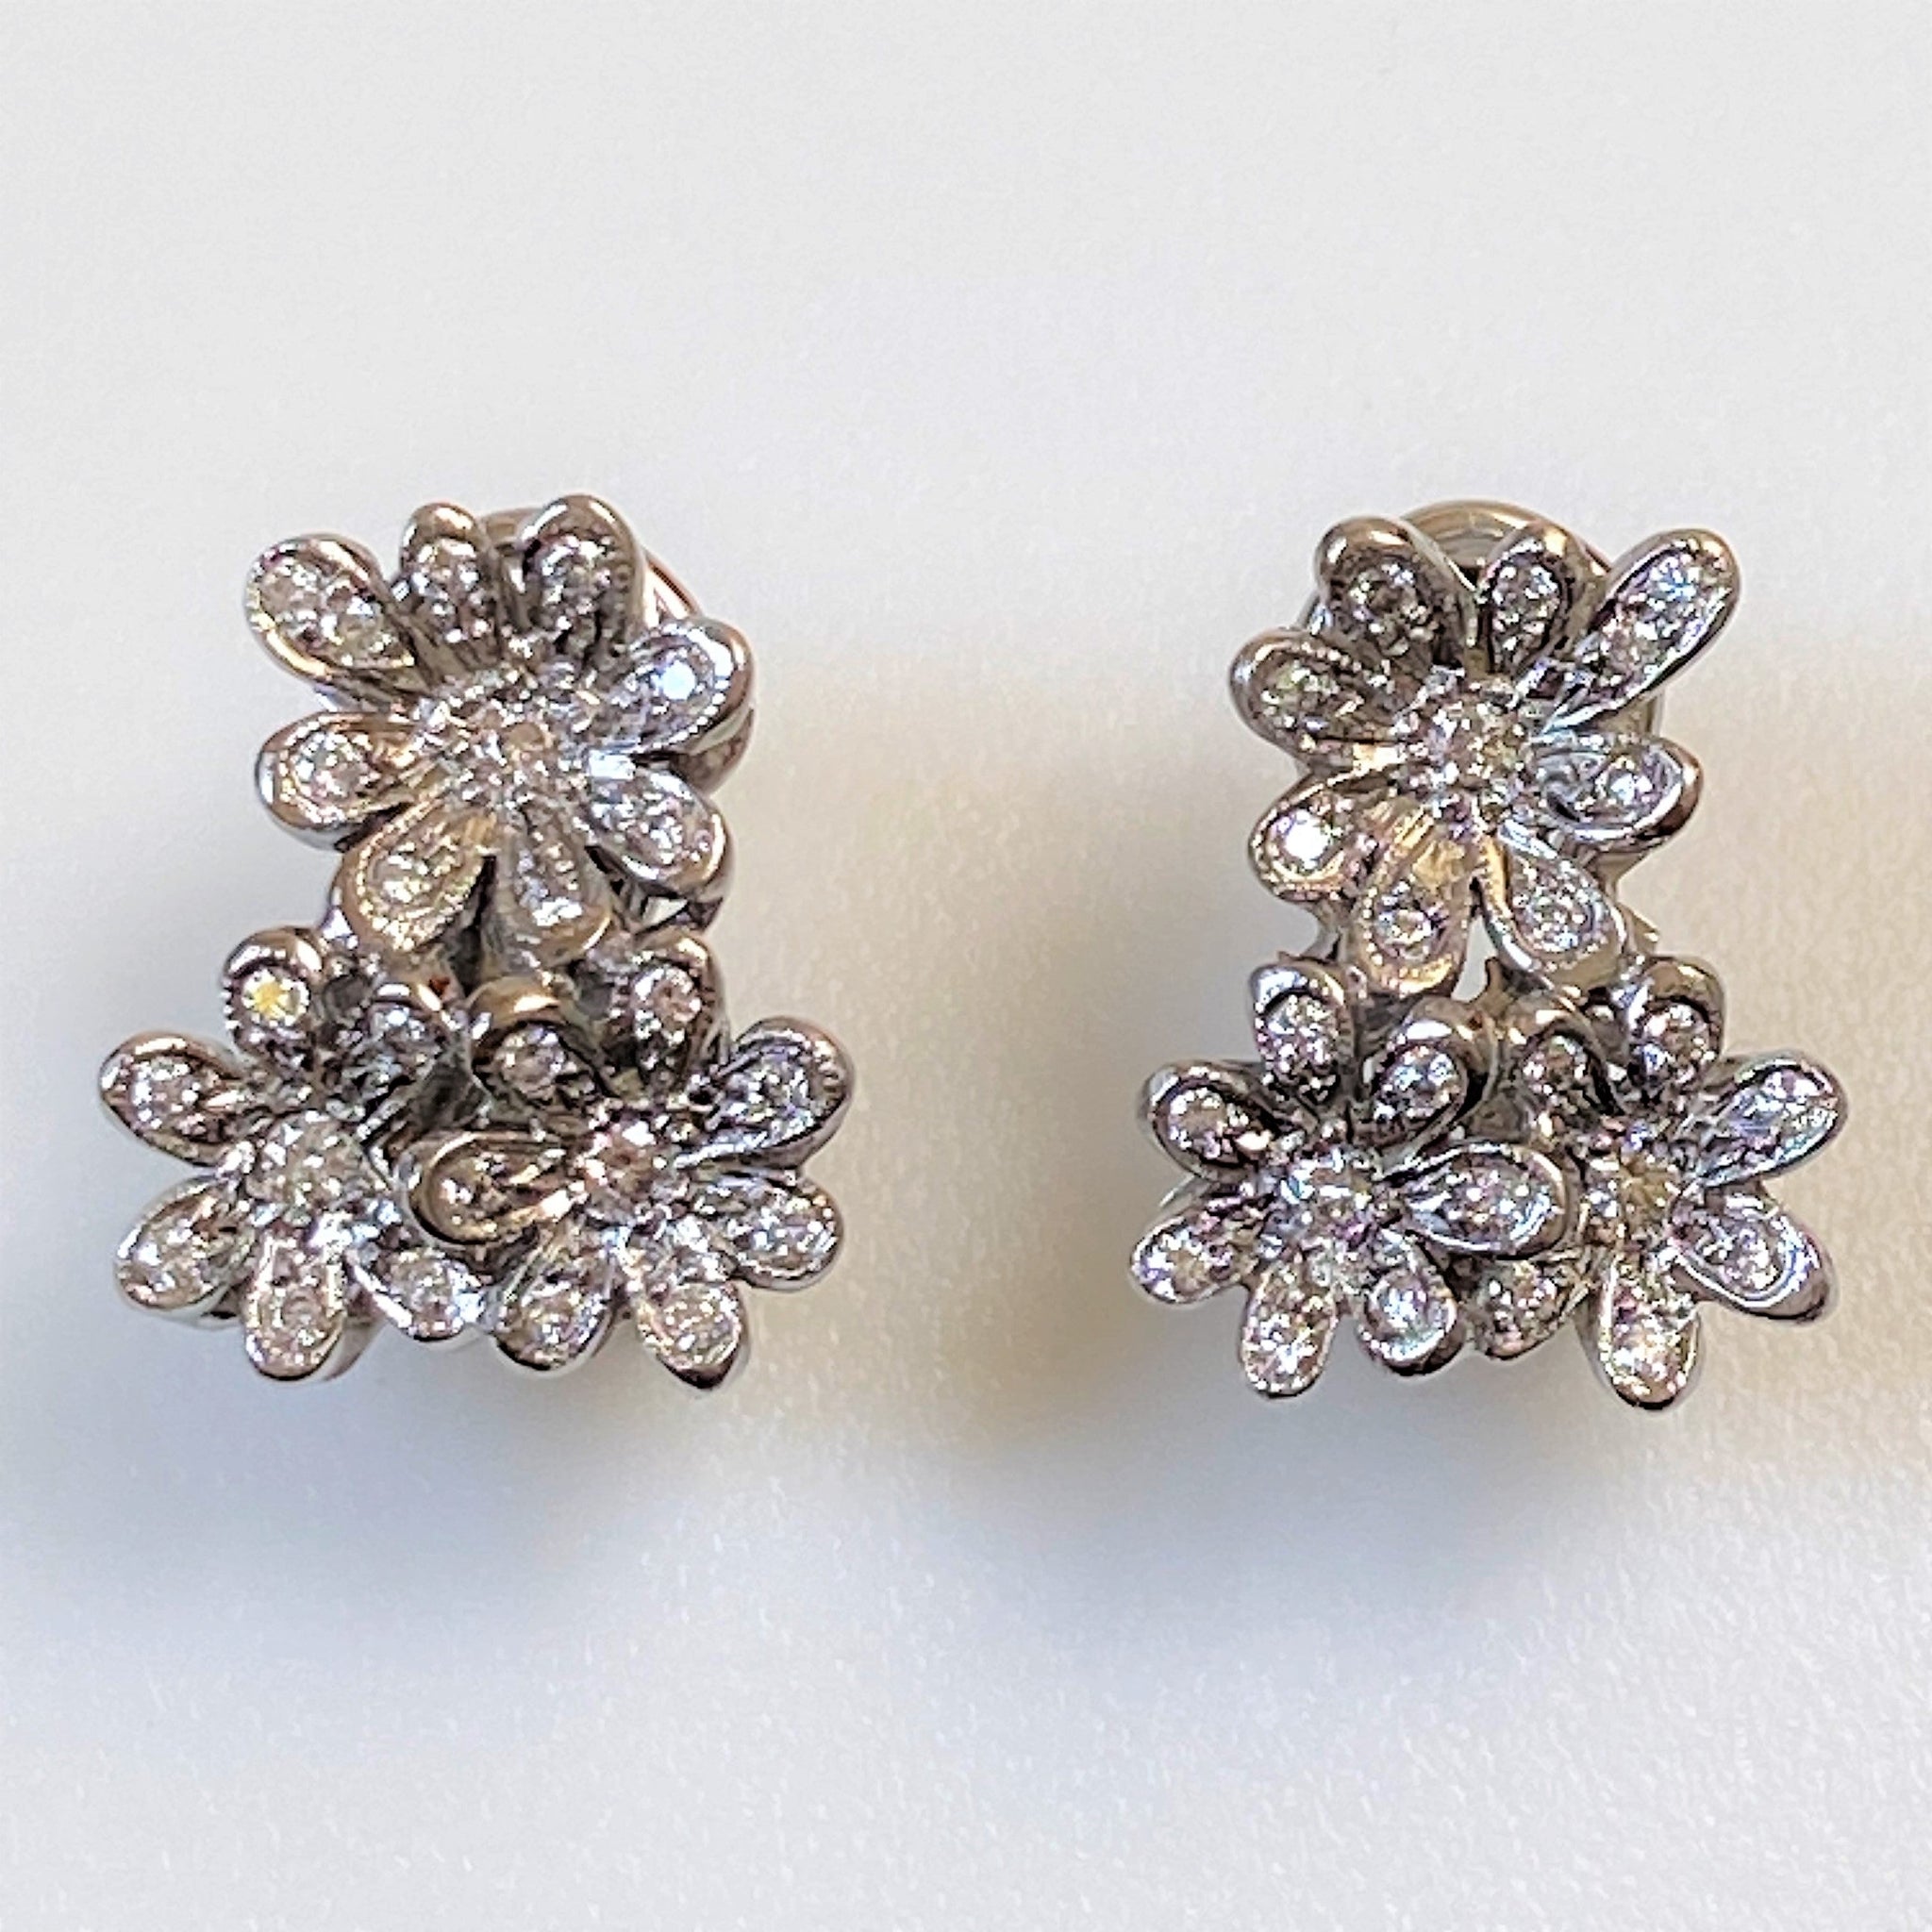 18ct White Gold and Diamond Flower Earrings